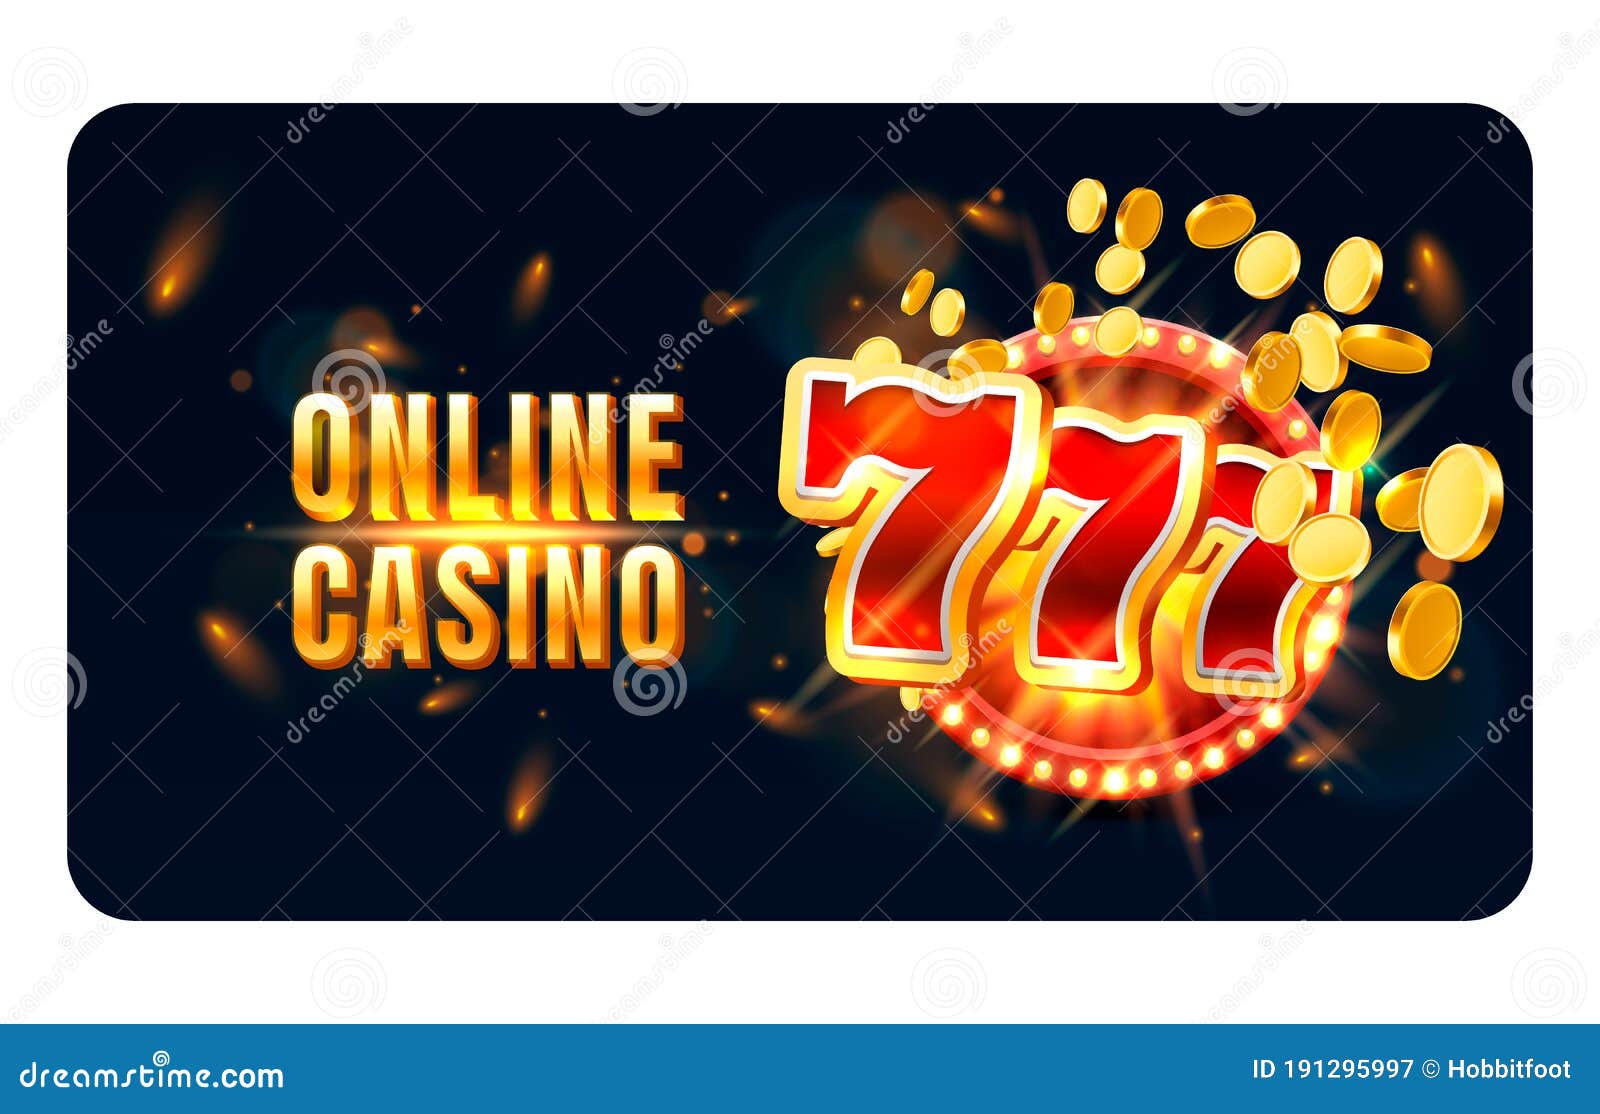 A Good casino online Is...